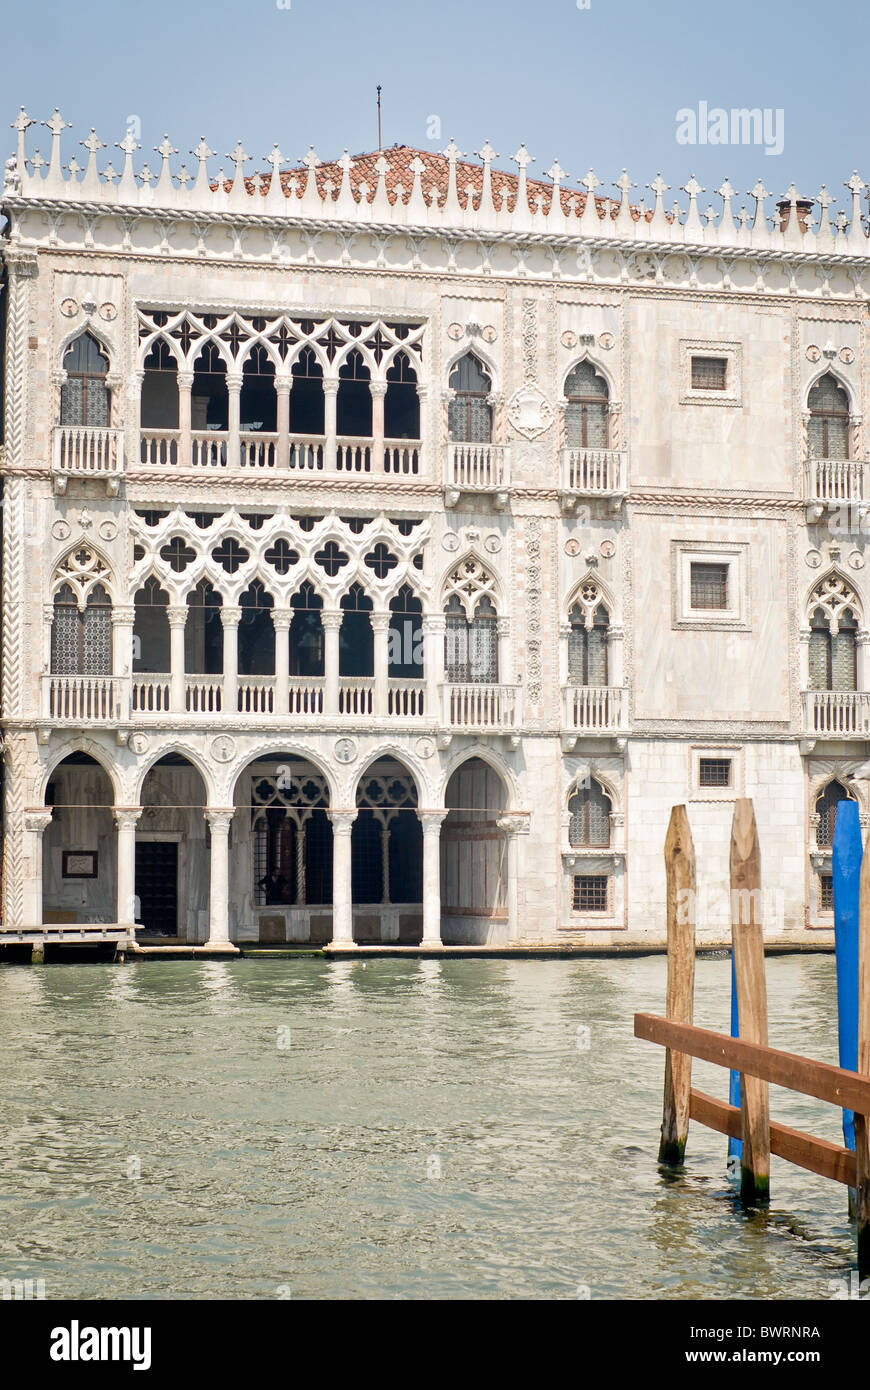 Venetian merchants hi-res stock photography and images - Alamy